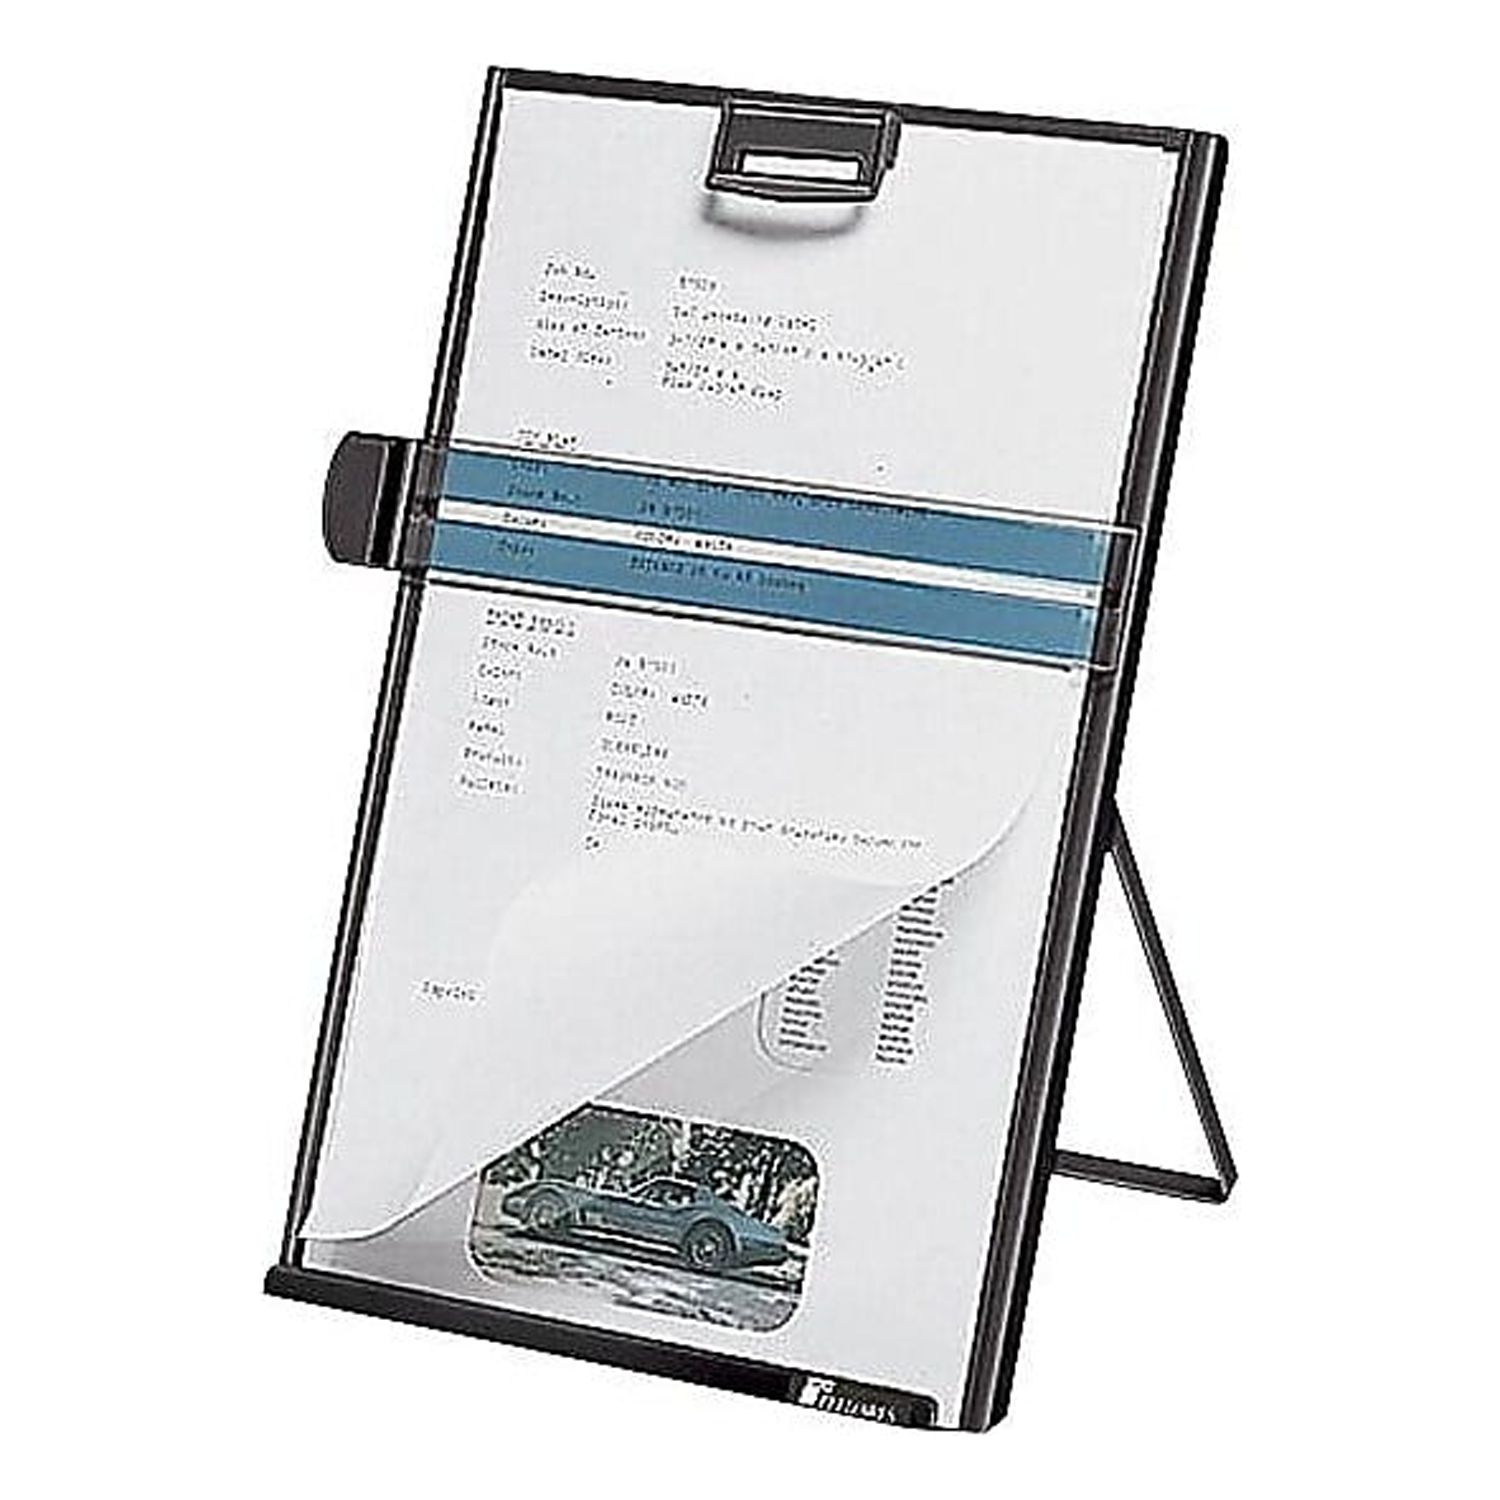 Fellowes 11053 Letter-Size Freestanding Desktop Copyholder, Stainless Steel, Black - image 4 of 5